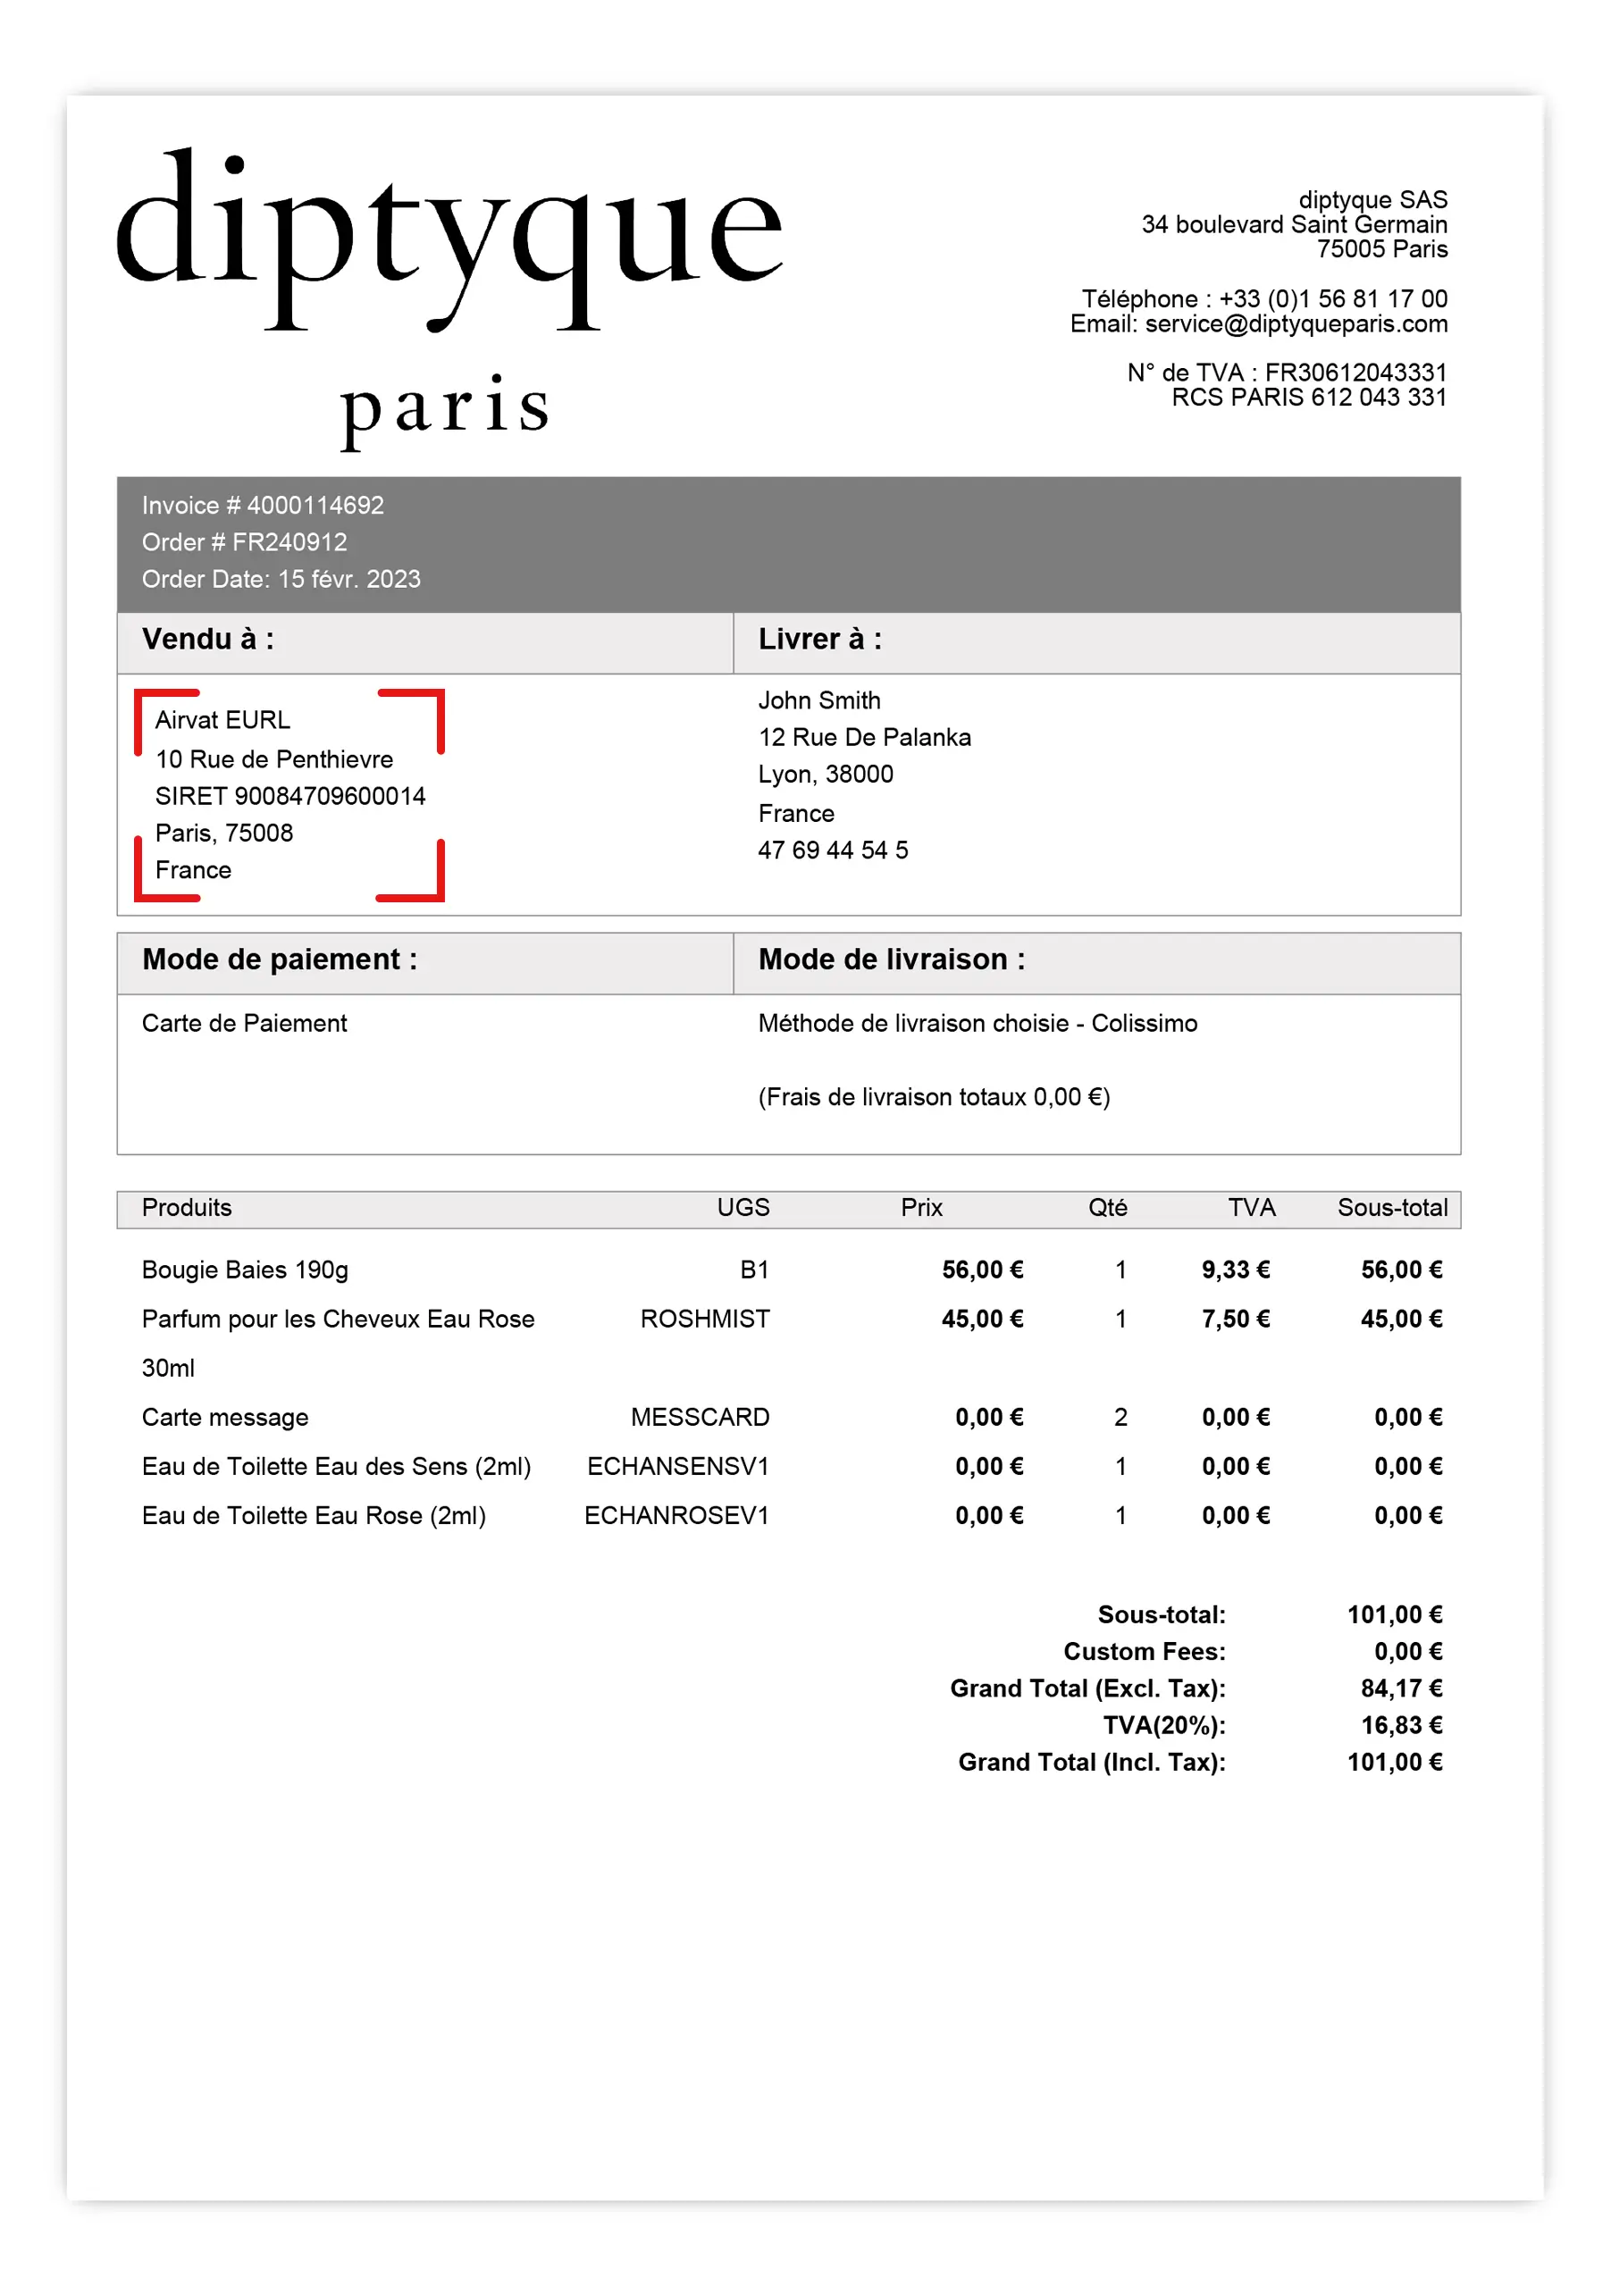 vat refund on online purchase in France